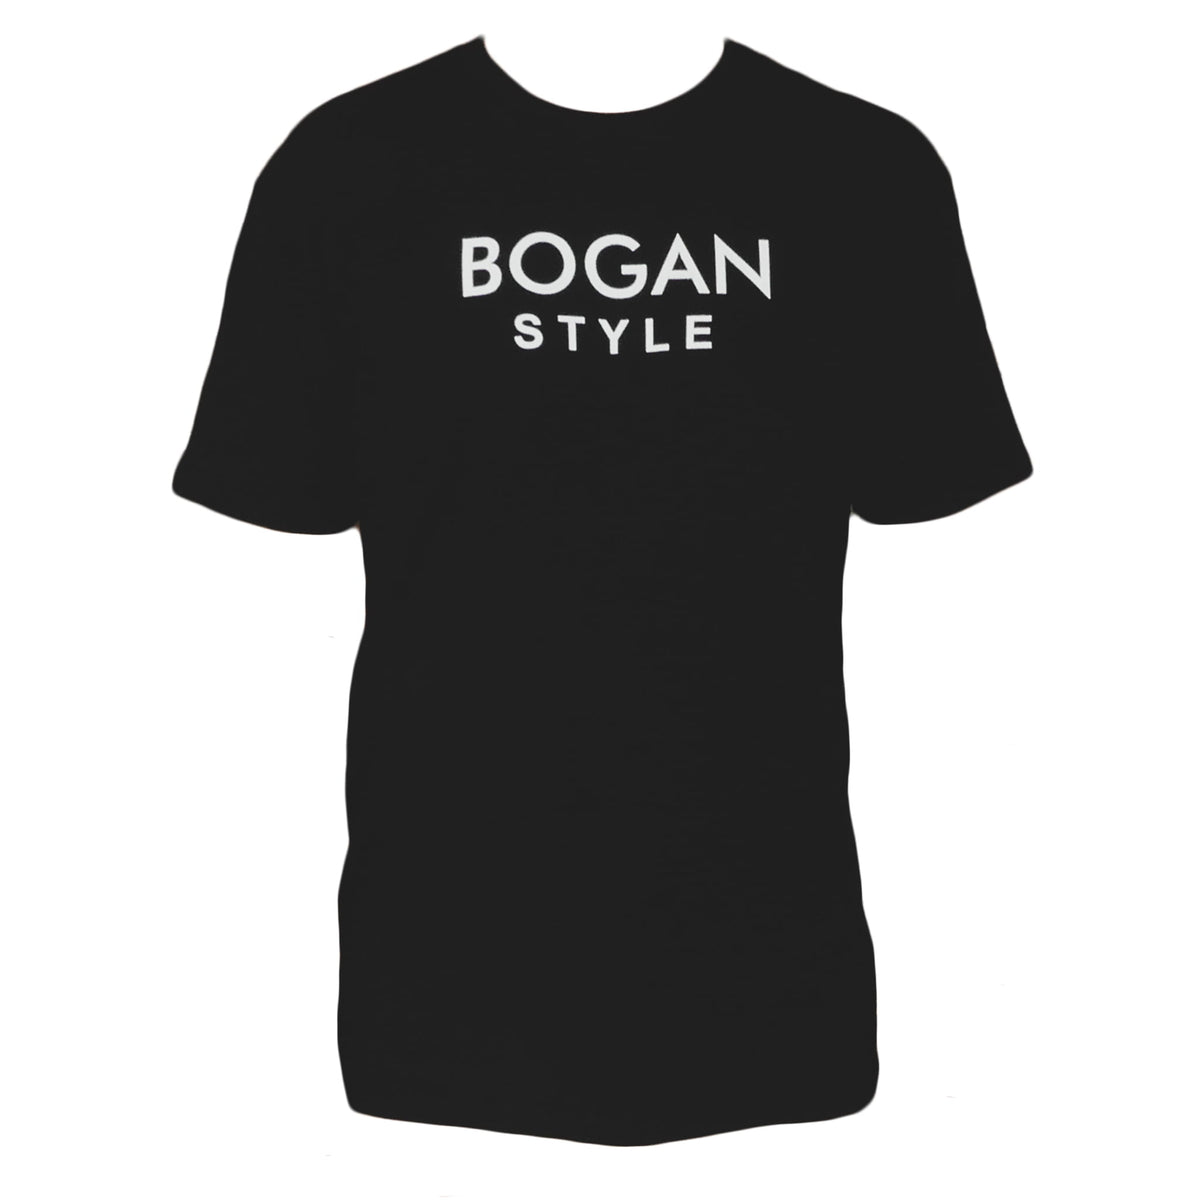 Classic black 'Bogan Style' men's tee